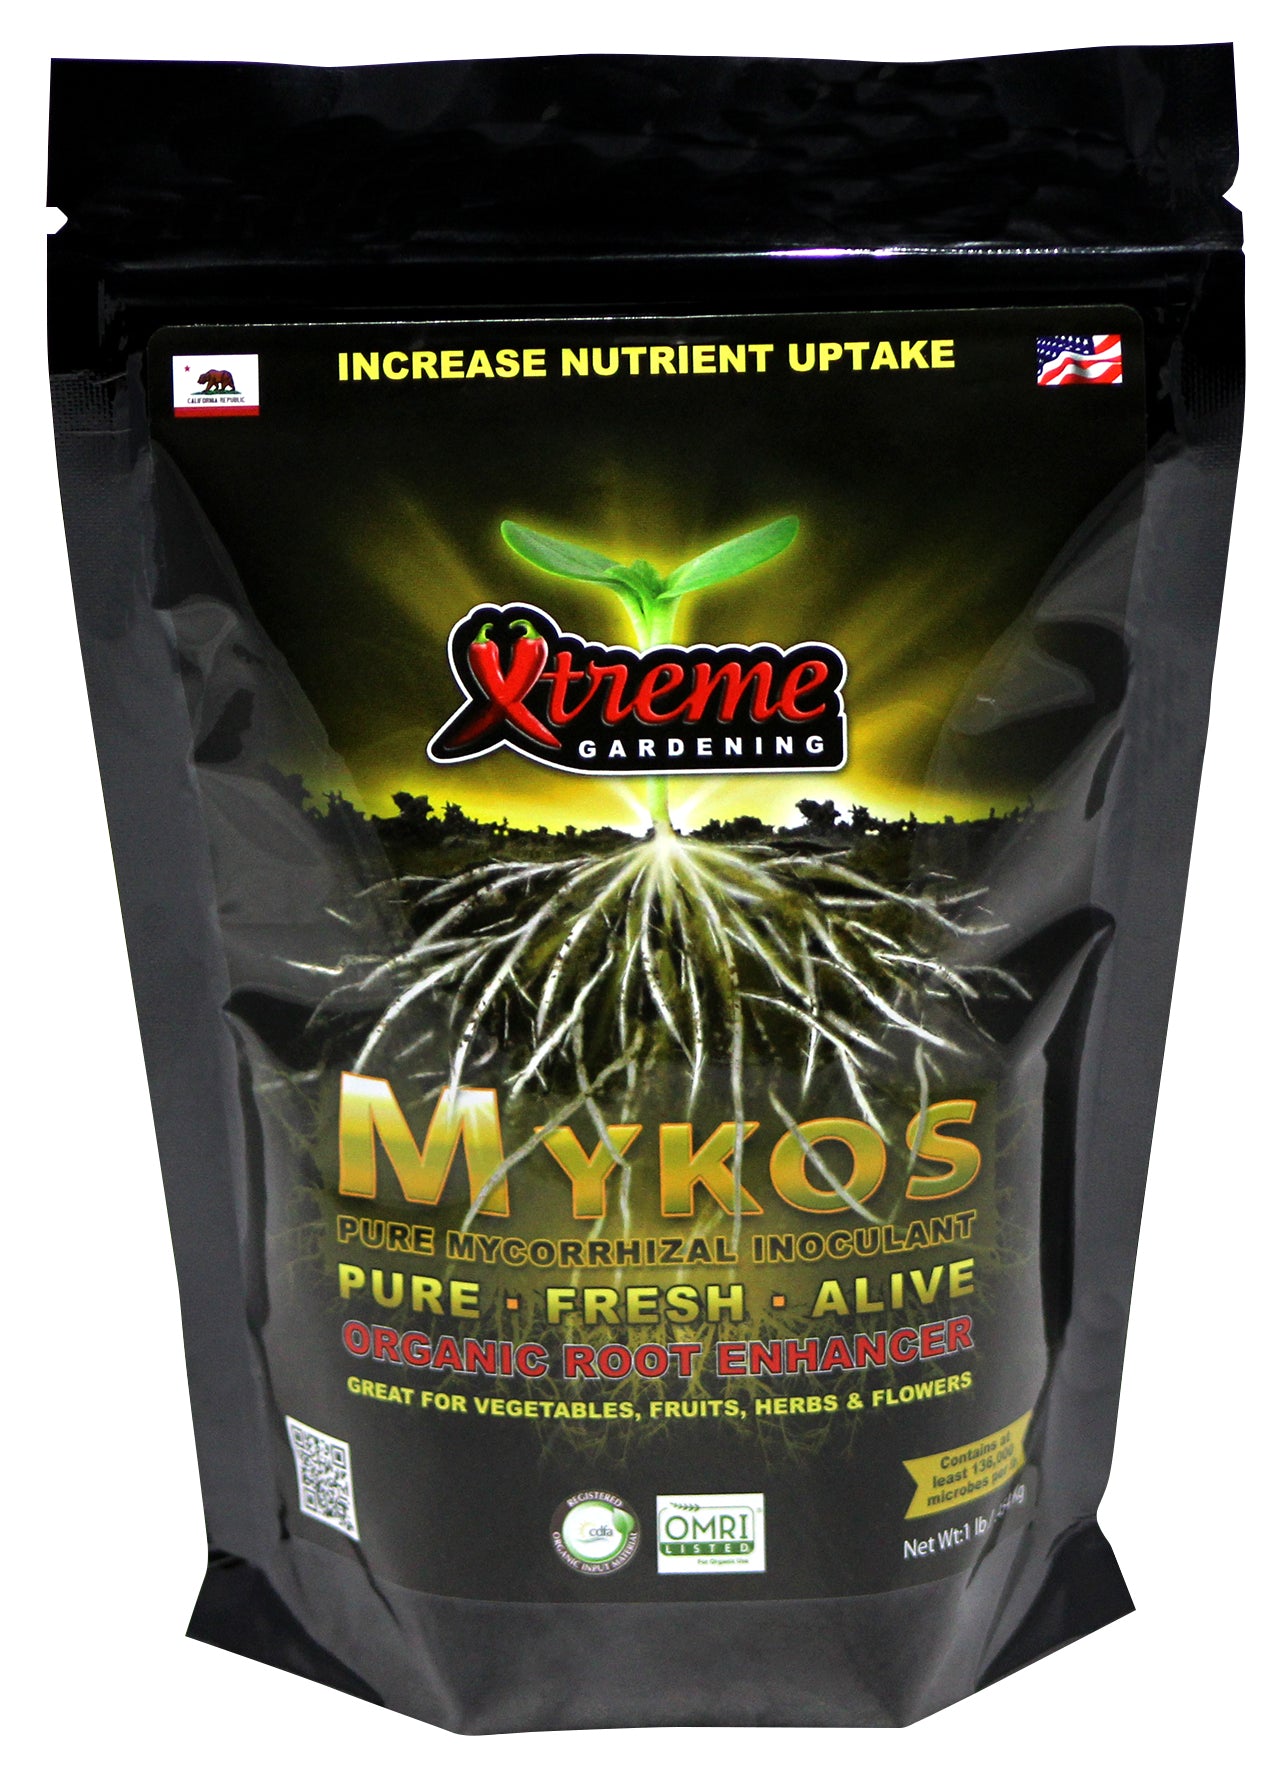 Xtreme Gardening Mykos 1lb